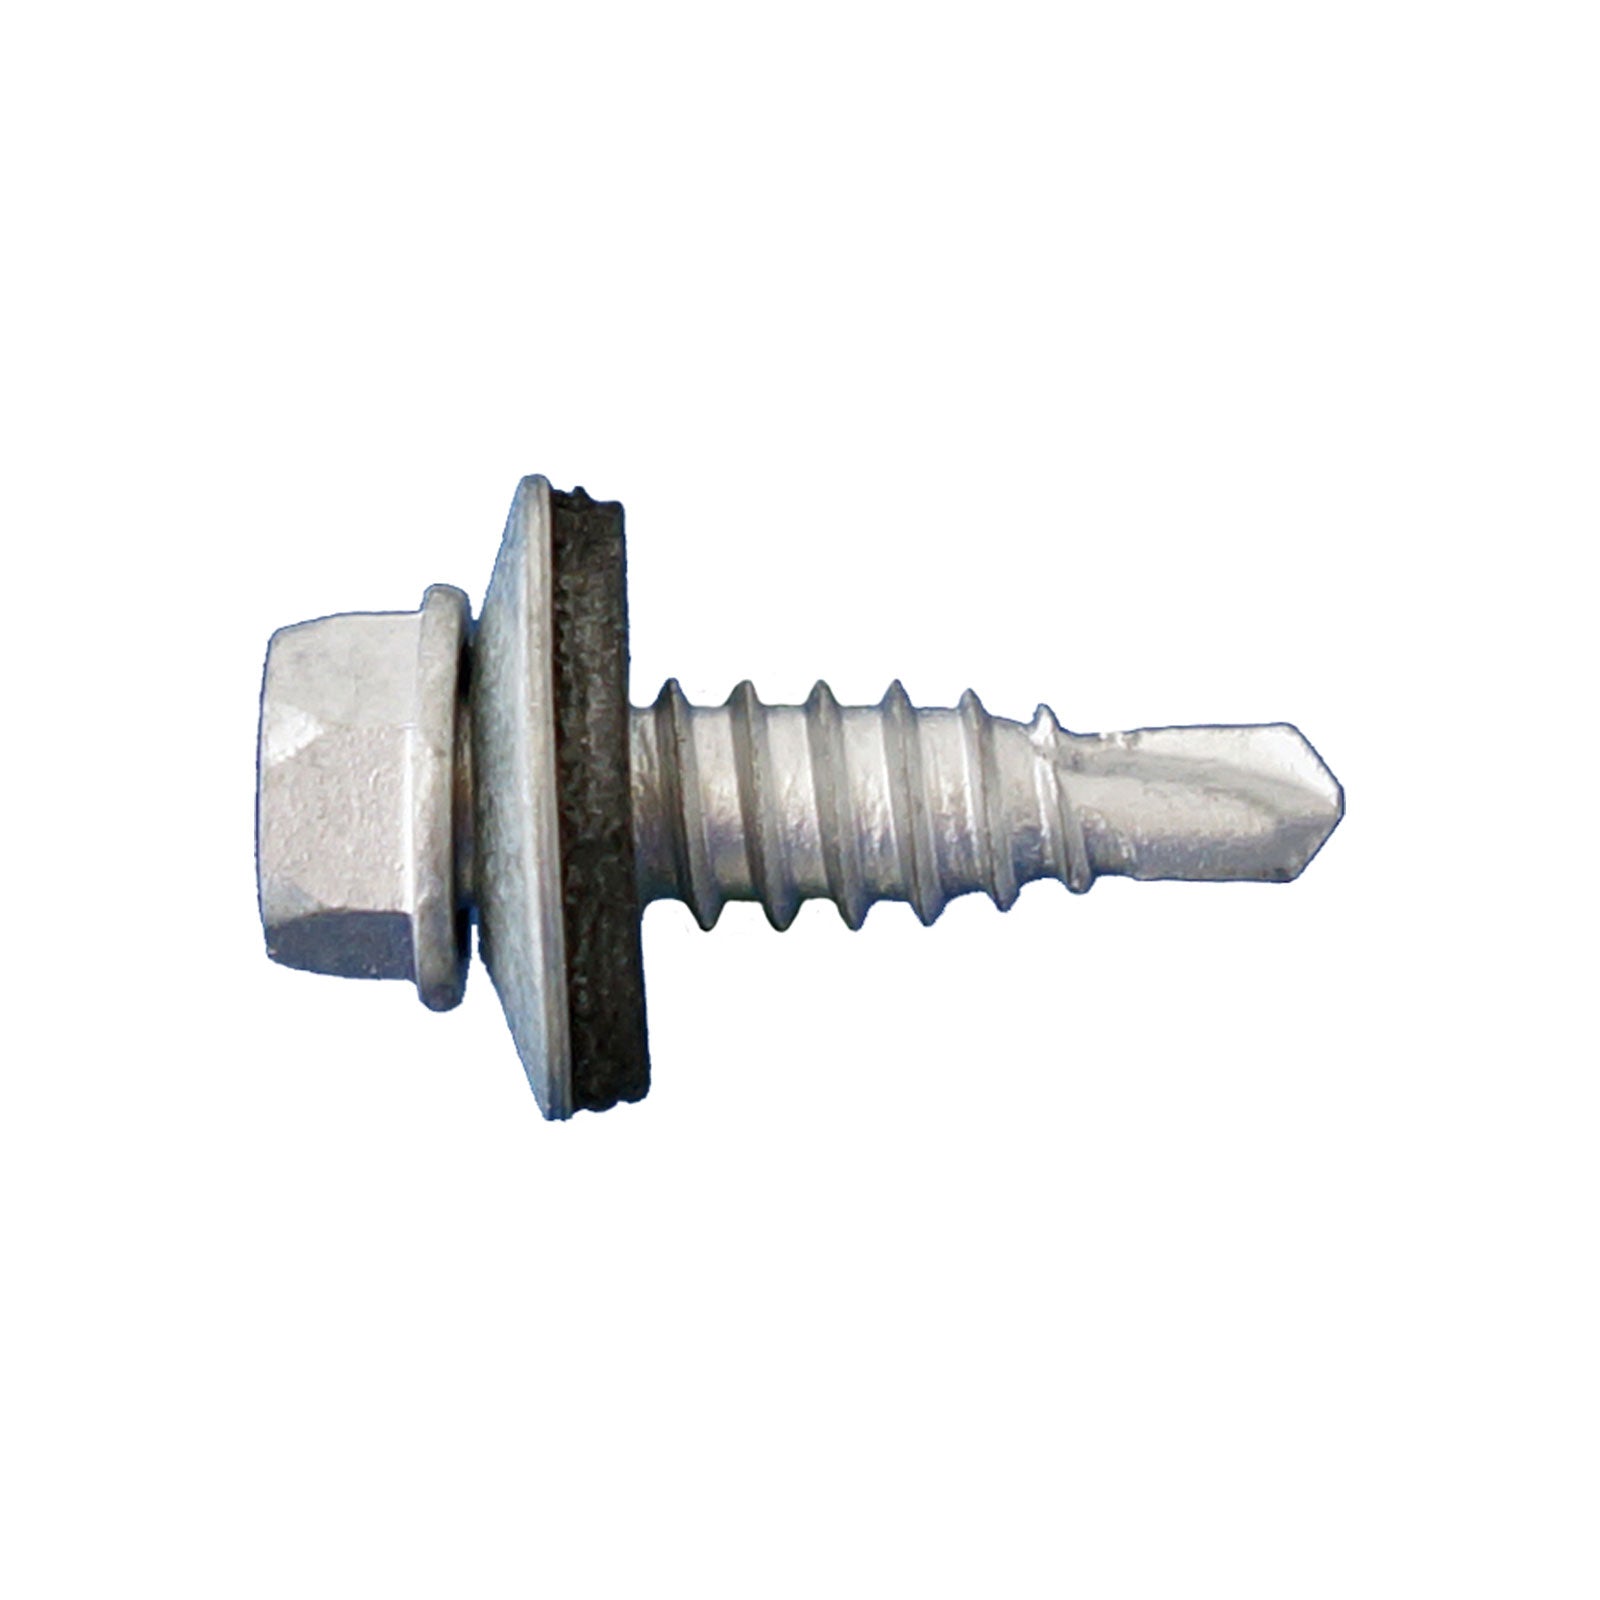 1/4" x 7/8" Self-Drilling Metal Screw w/Washer, Hex Head - Dagger-Guard Coating, Pkg 2500